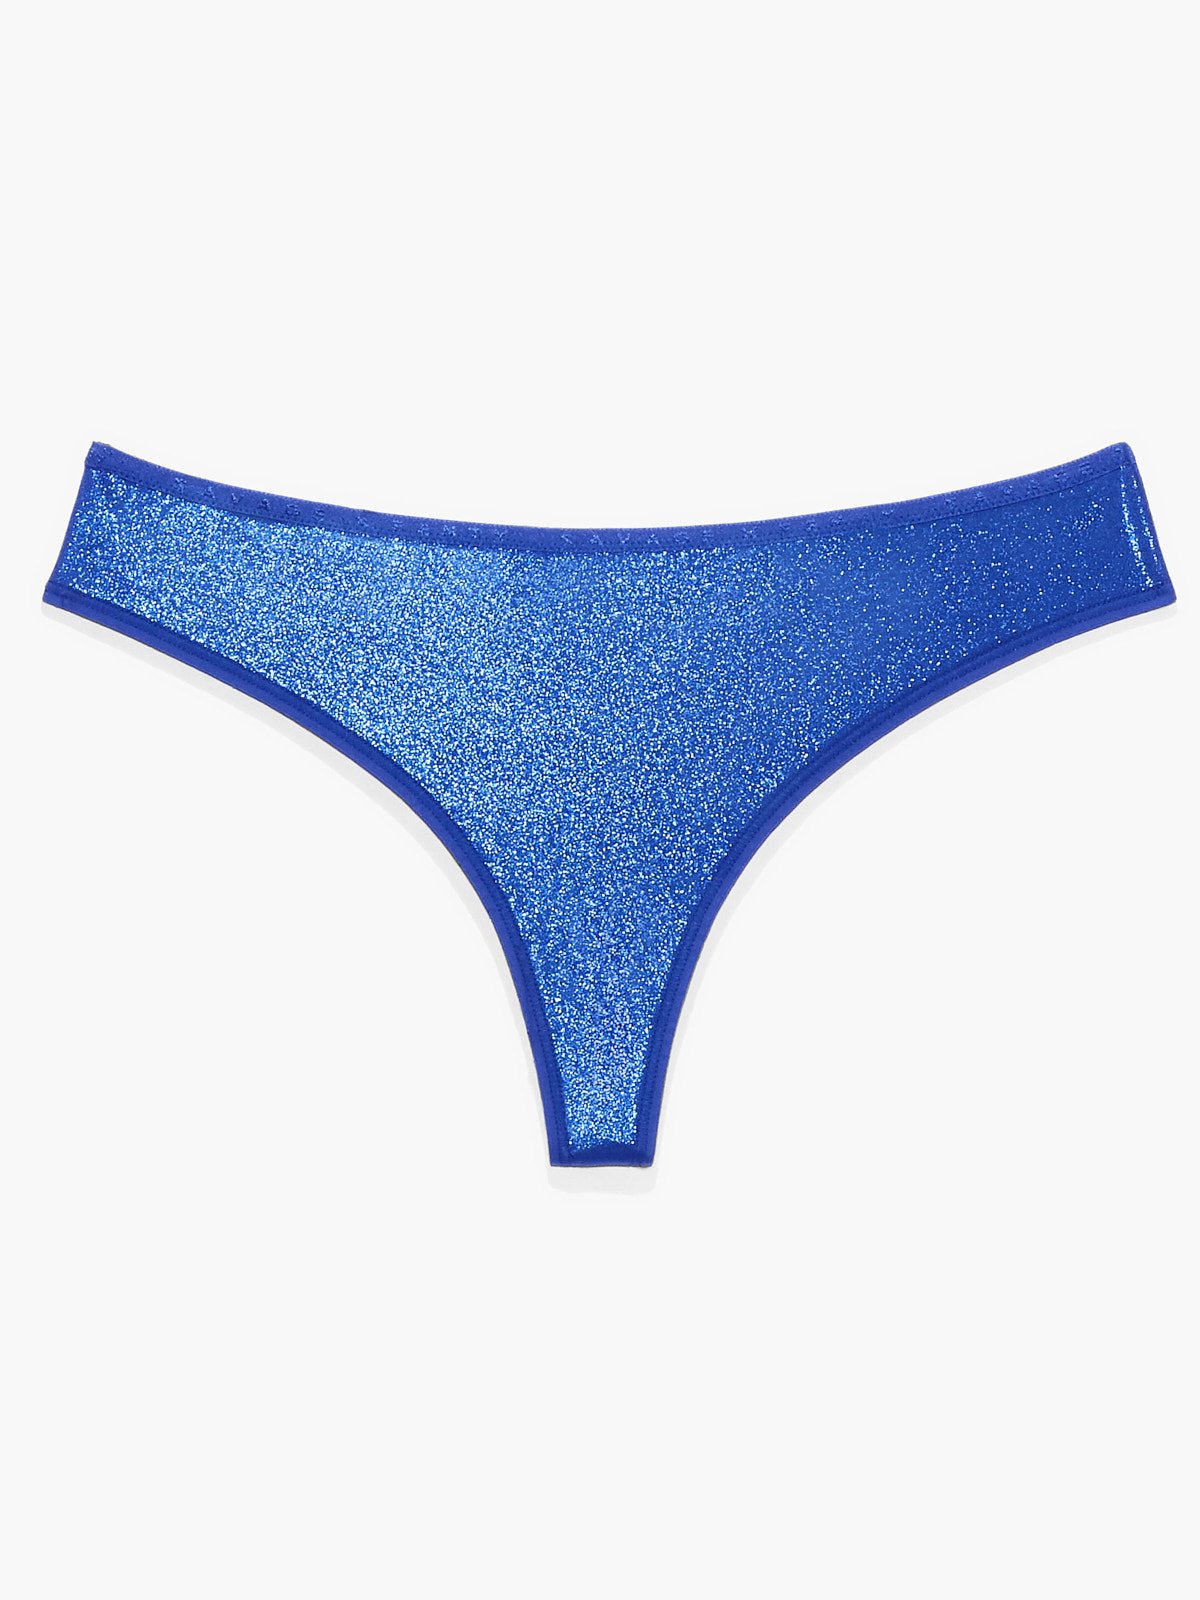 Entyinea Womens Panties Microfiber Smooth Stretch Brief Panty Blue L 